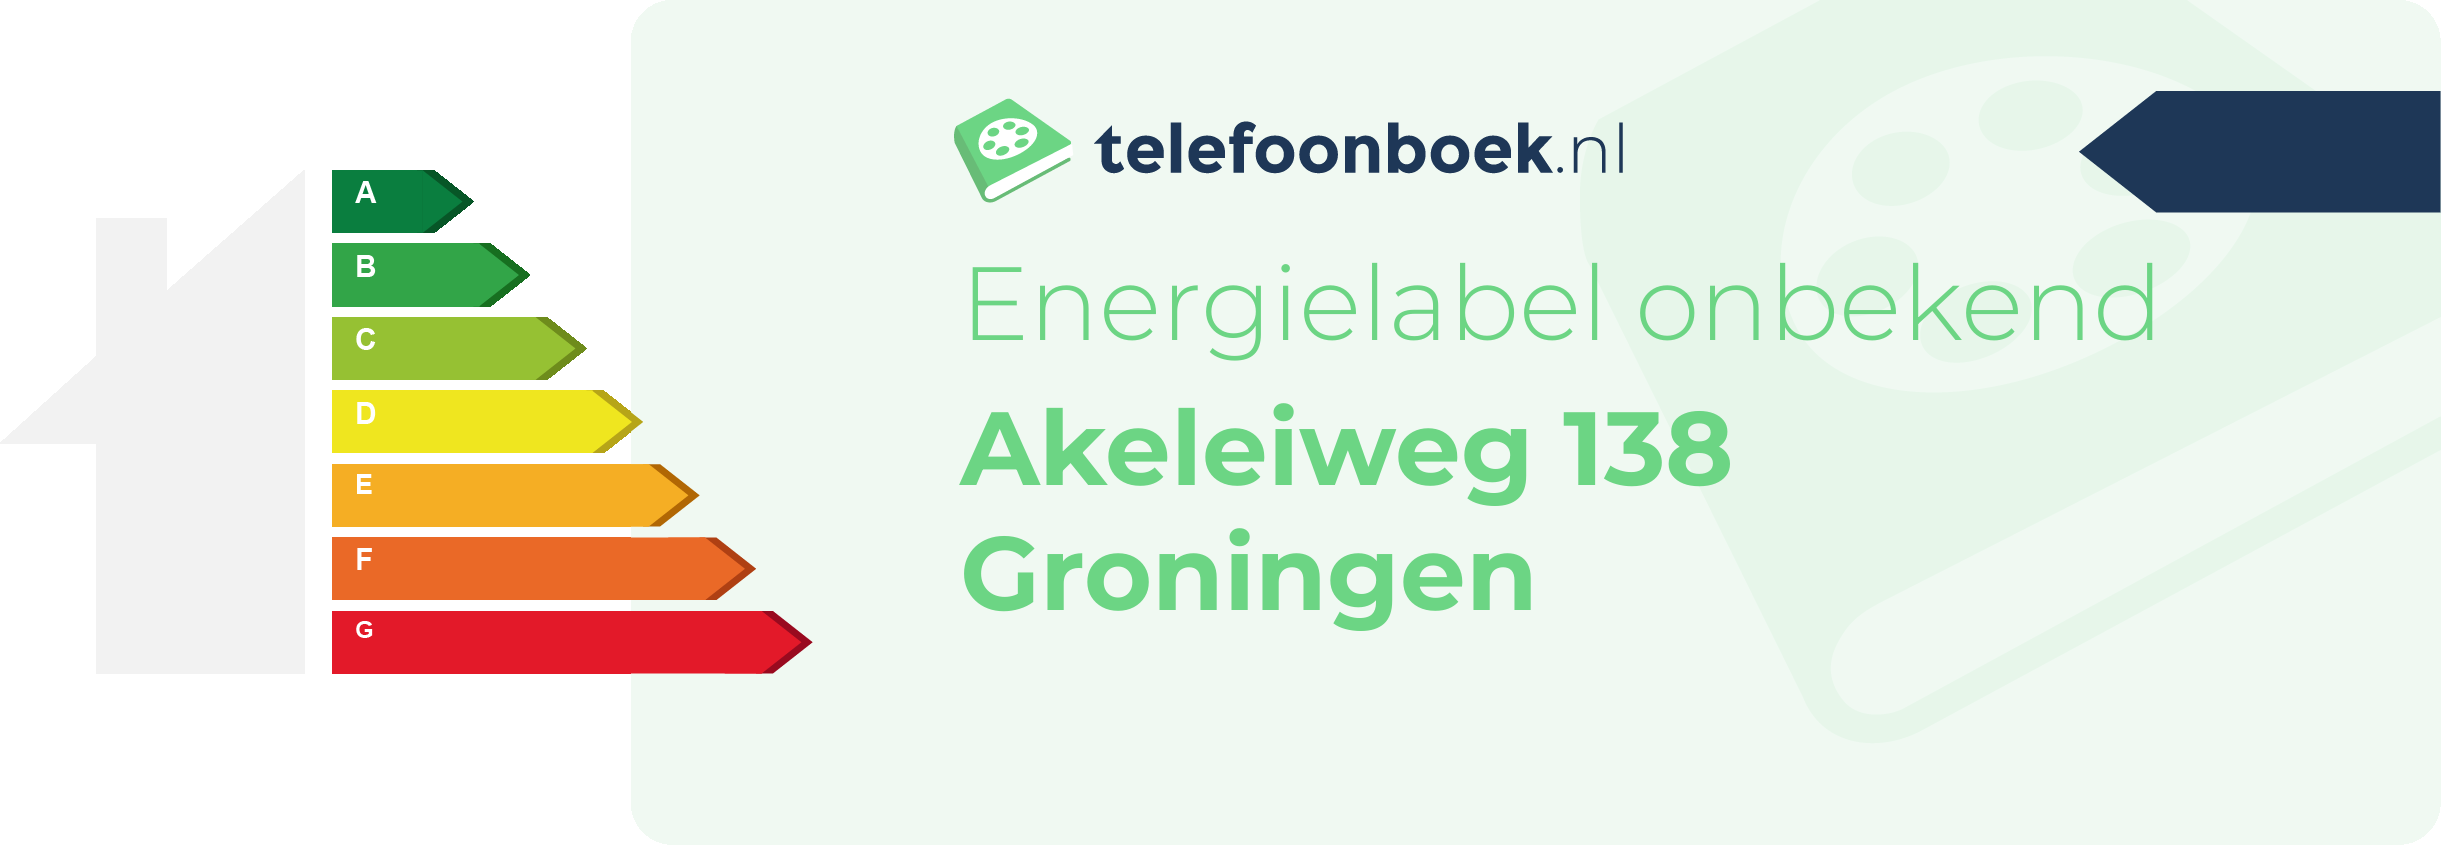 Energielabel Akeleiweg 138 Groningen